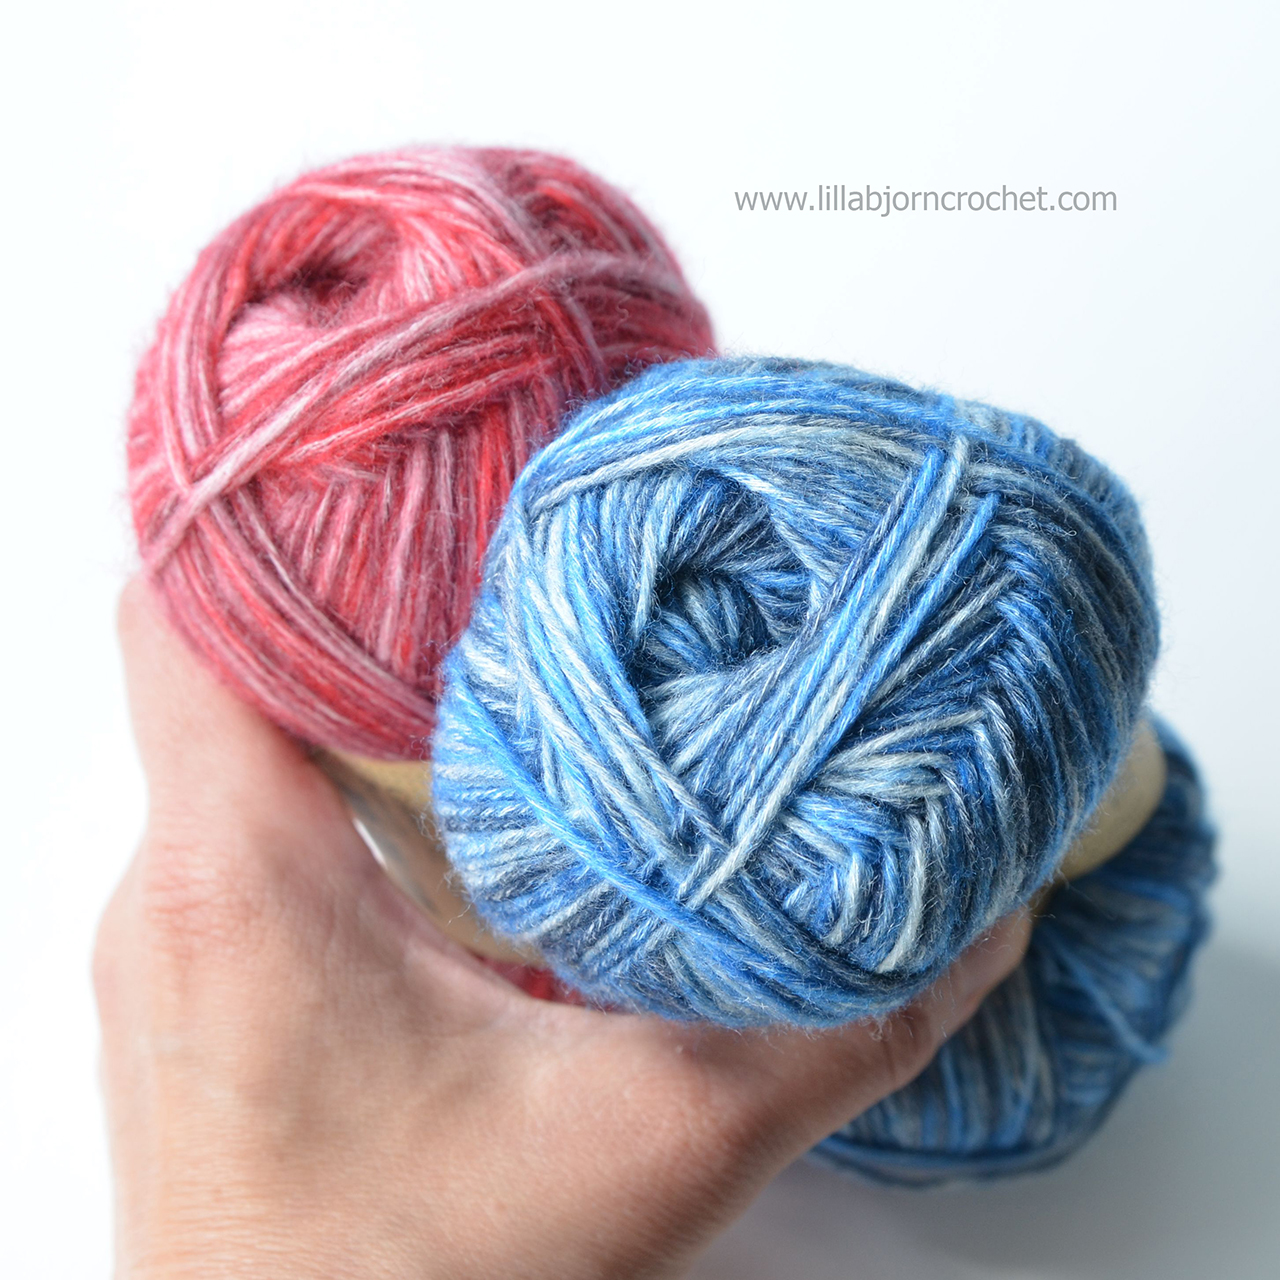 Cotton blend Spirit yarn by Scheepjes: yarn review by Lilla Bjorn Crochet